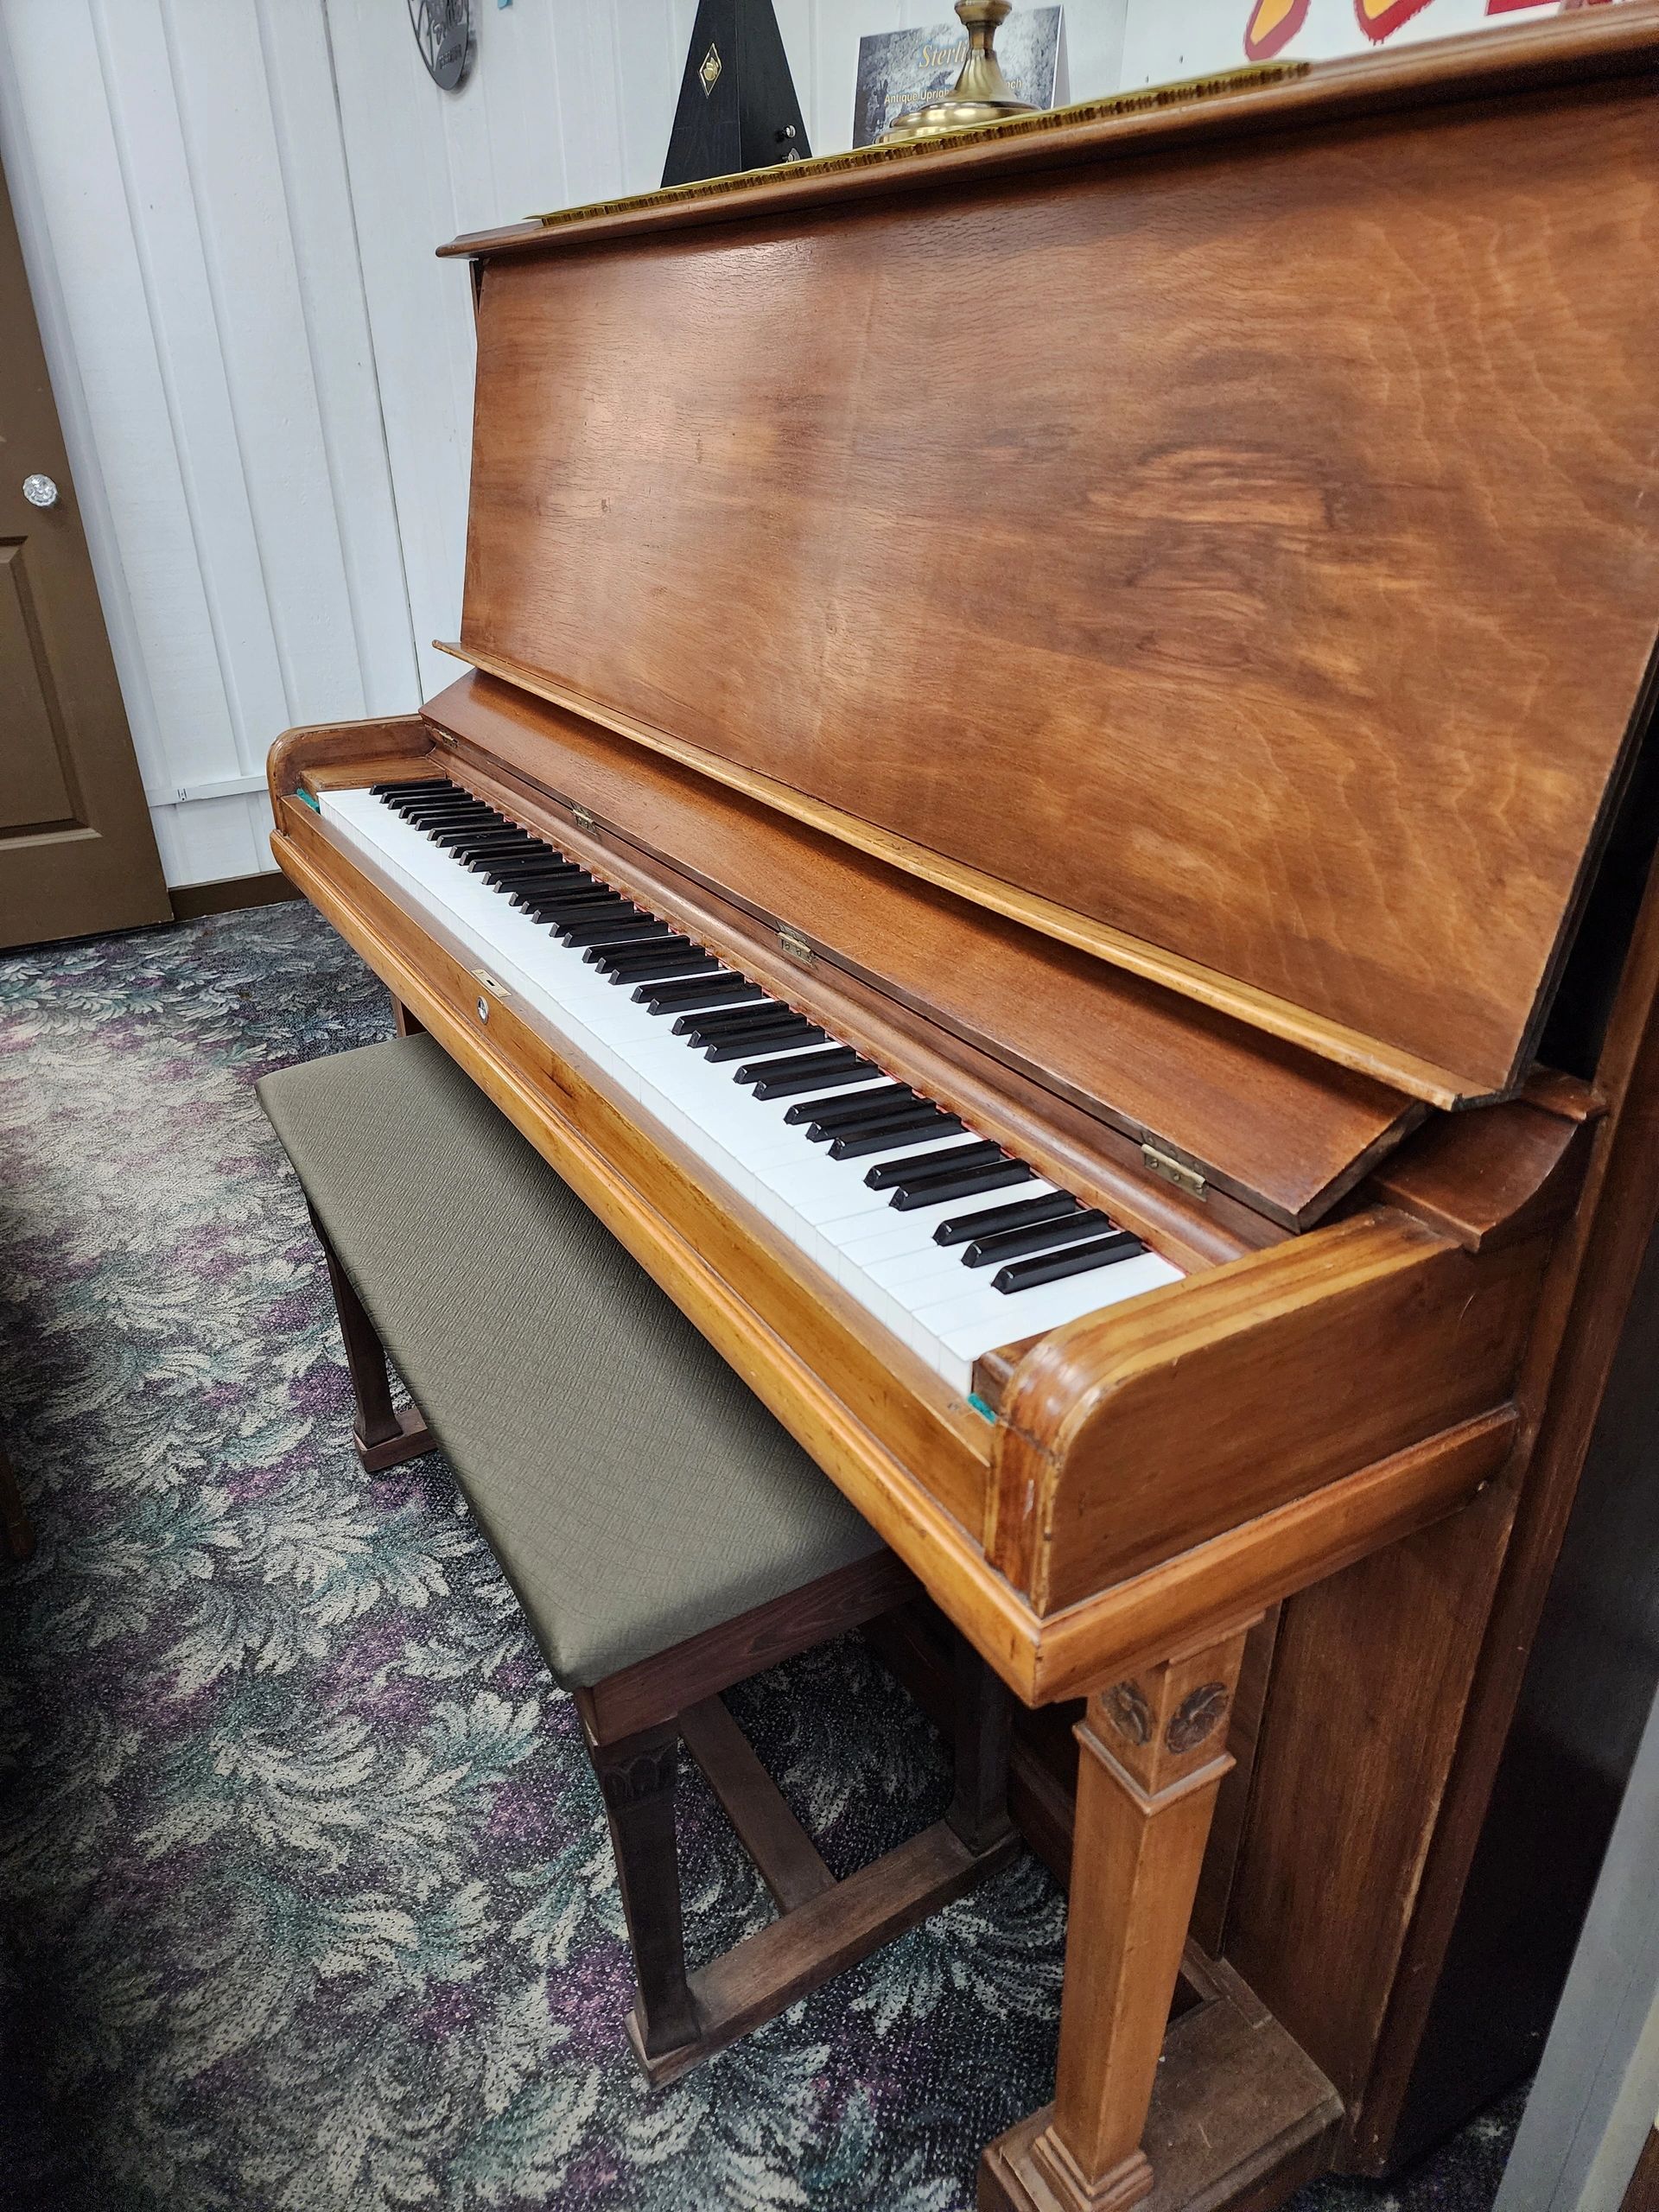 Antique upright piano - originally $499 - NOW 30% OFF!  JUST $349!